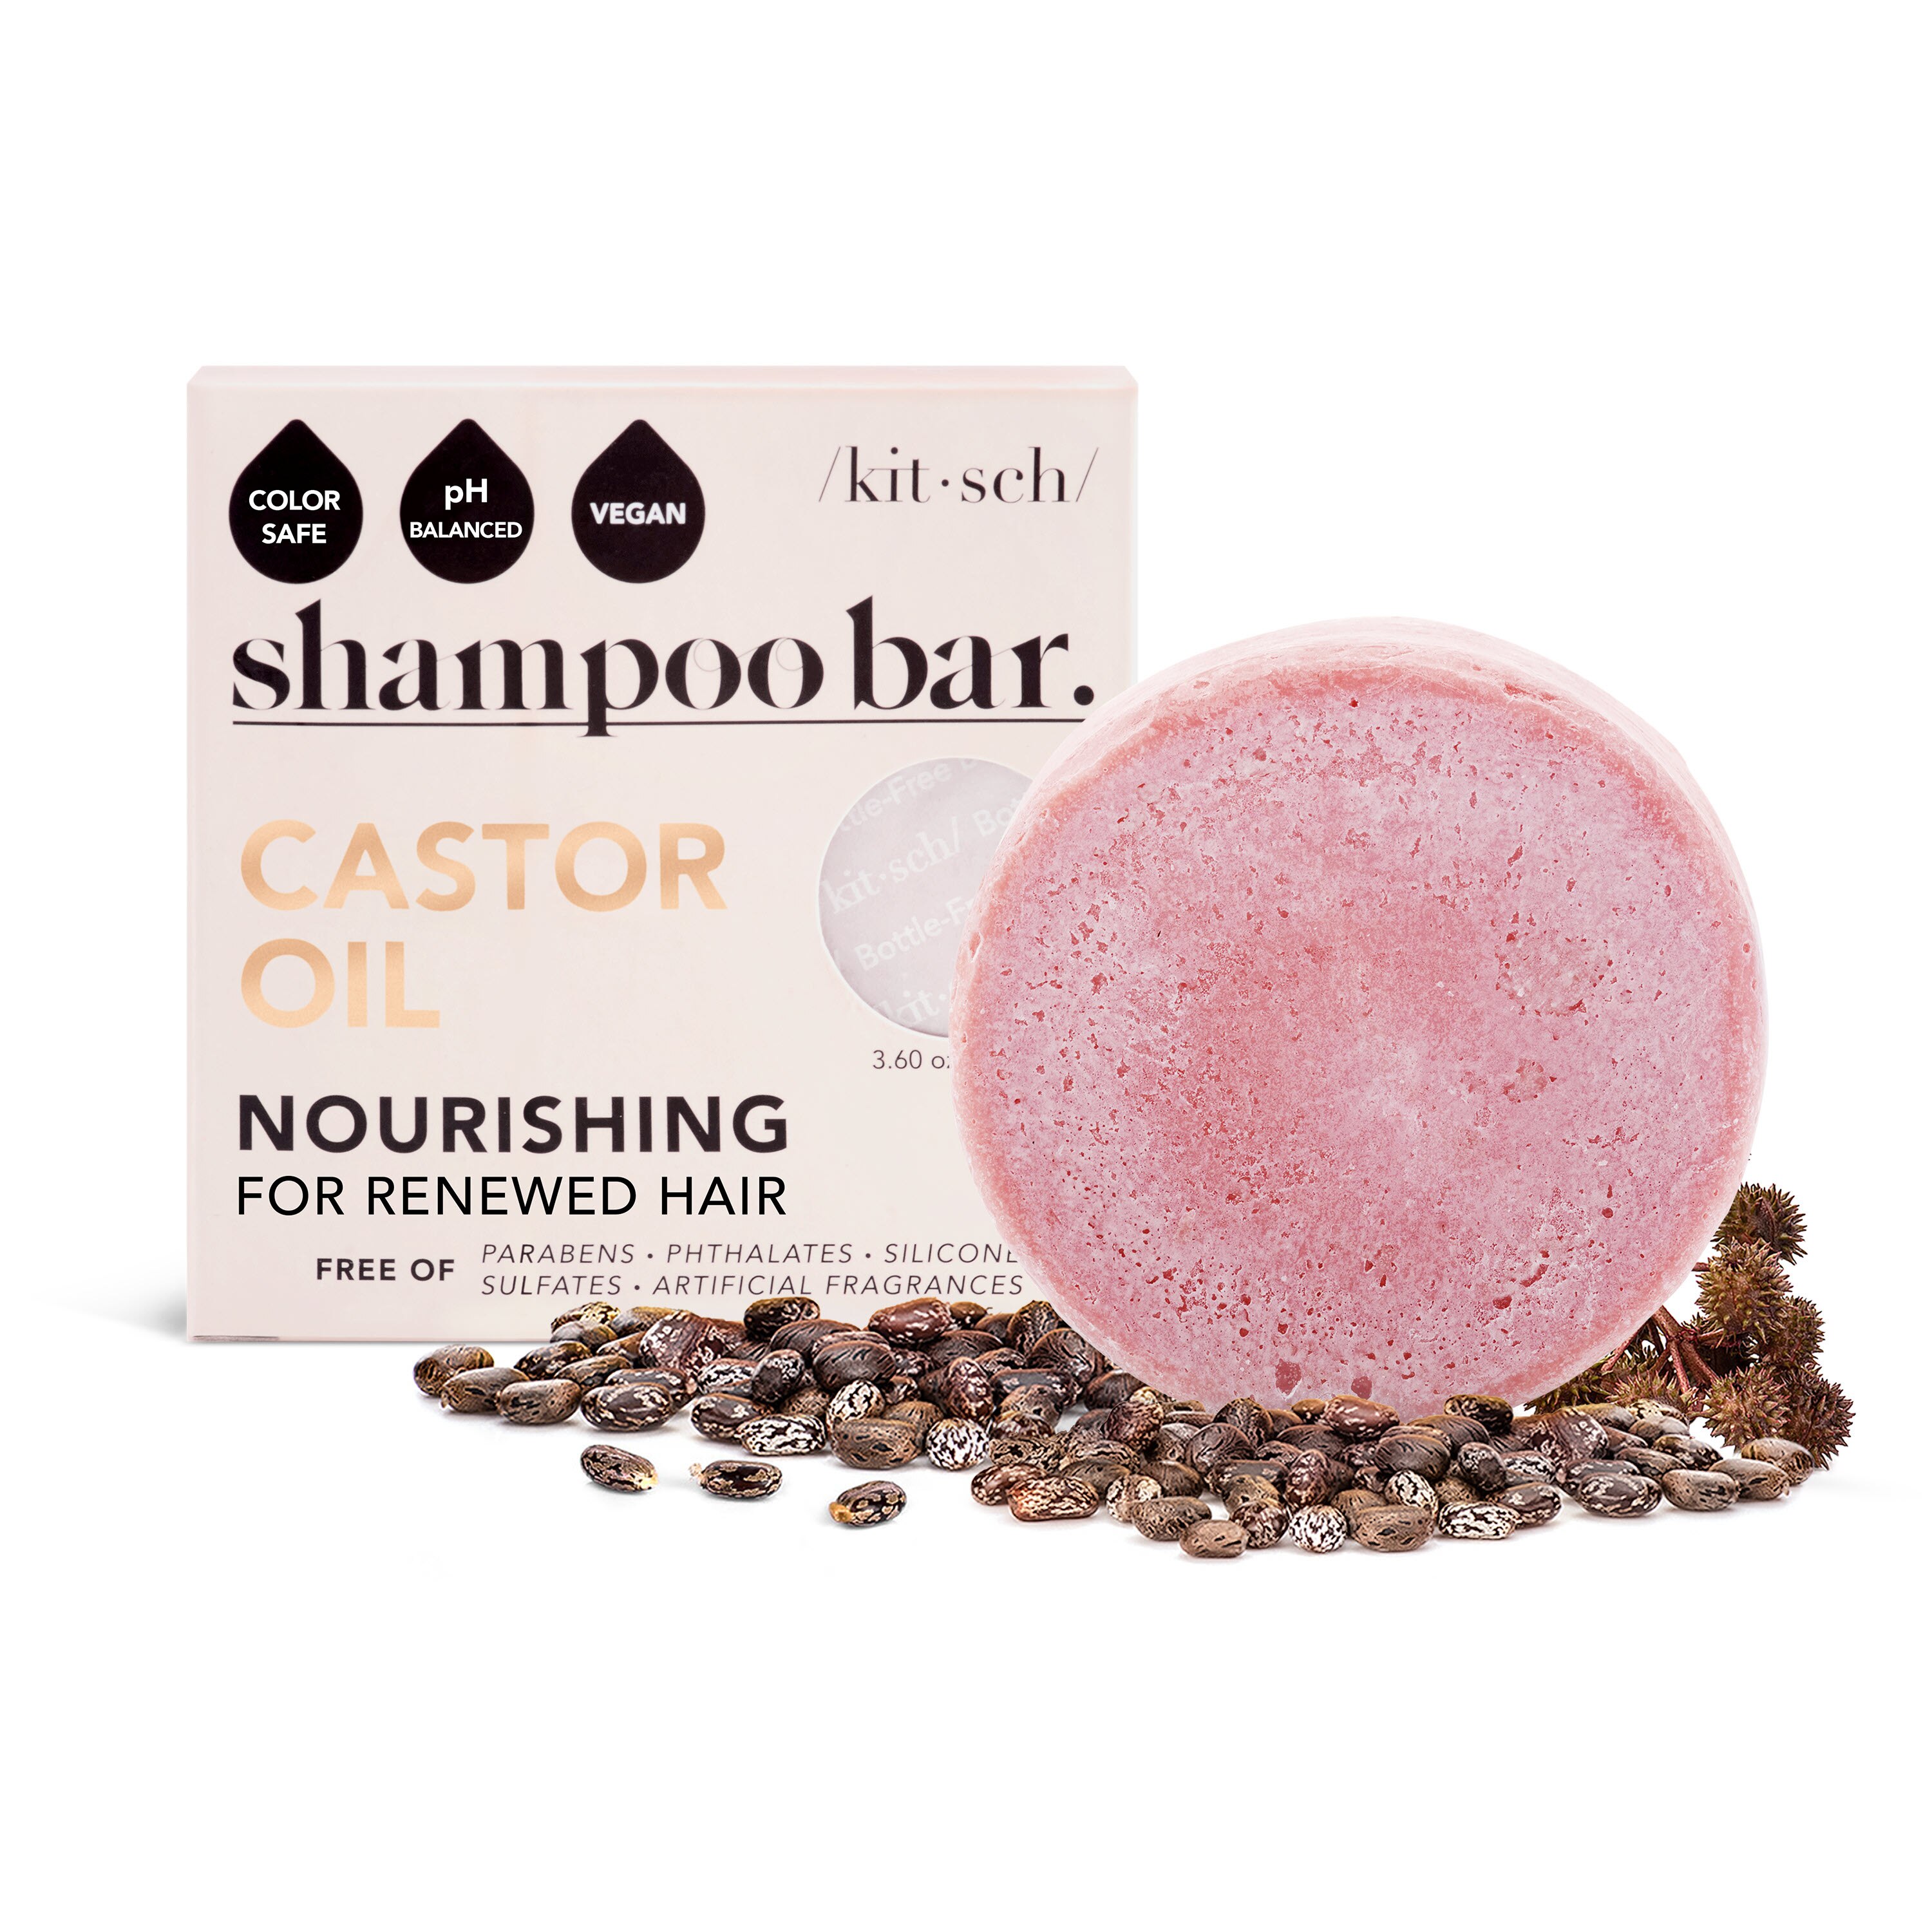 Kitsch Castor Oil Nourishing Shampoo Bar Pick Up In Store Today At Cvs